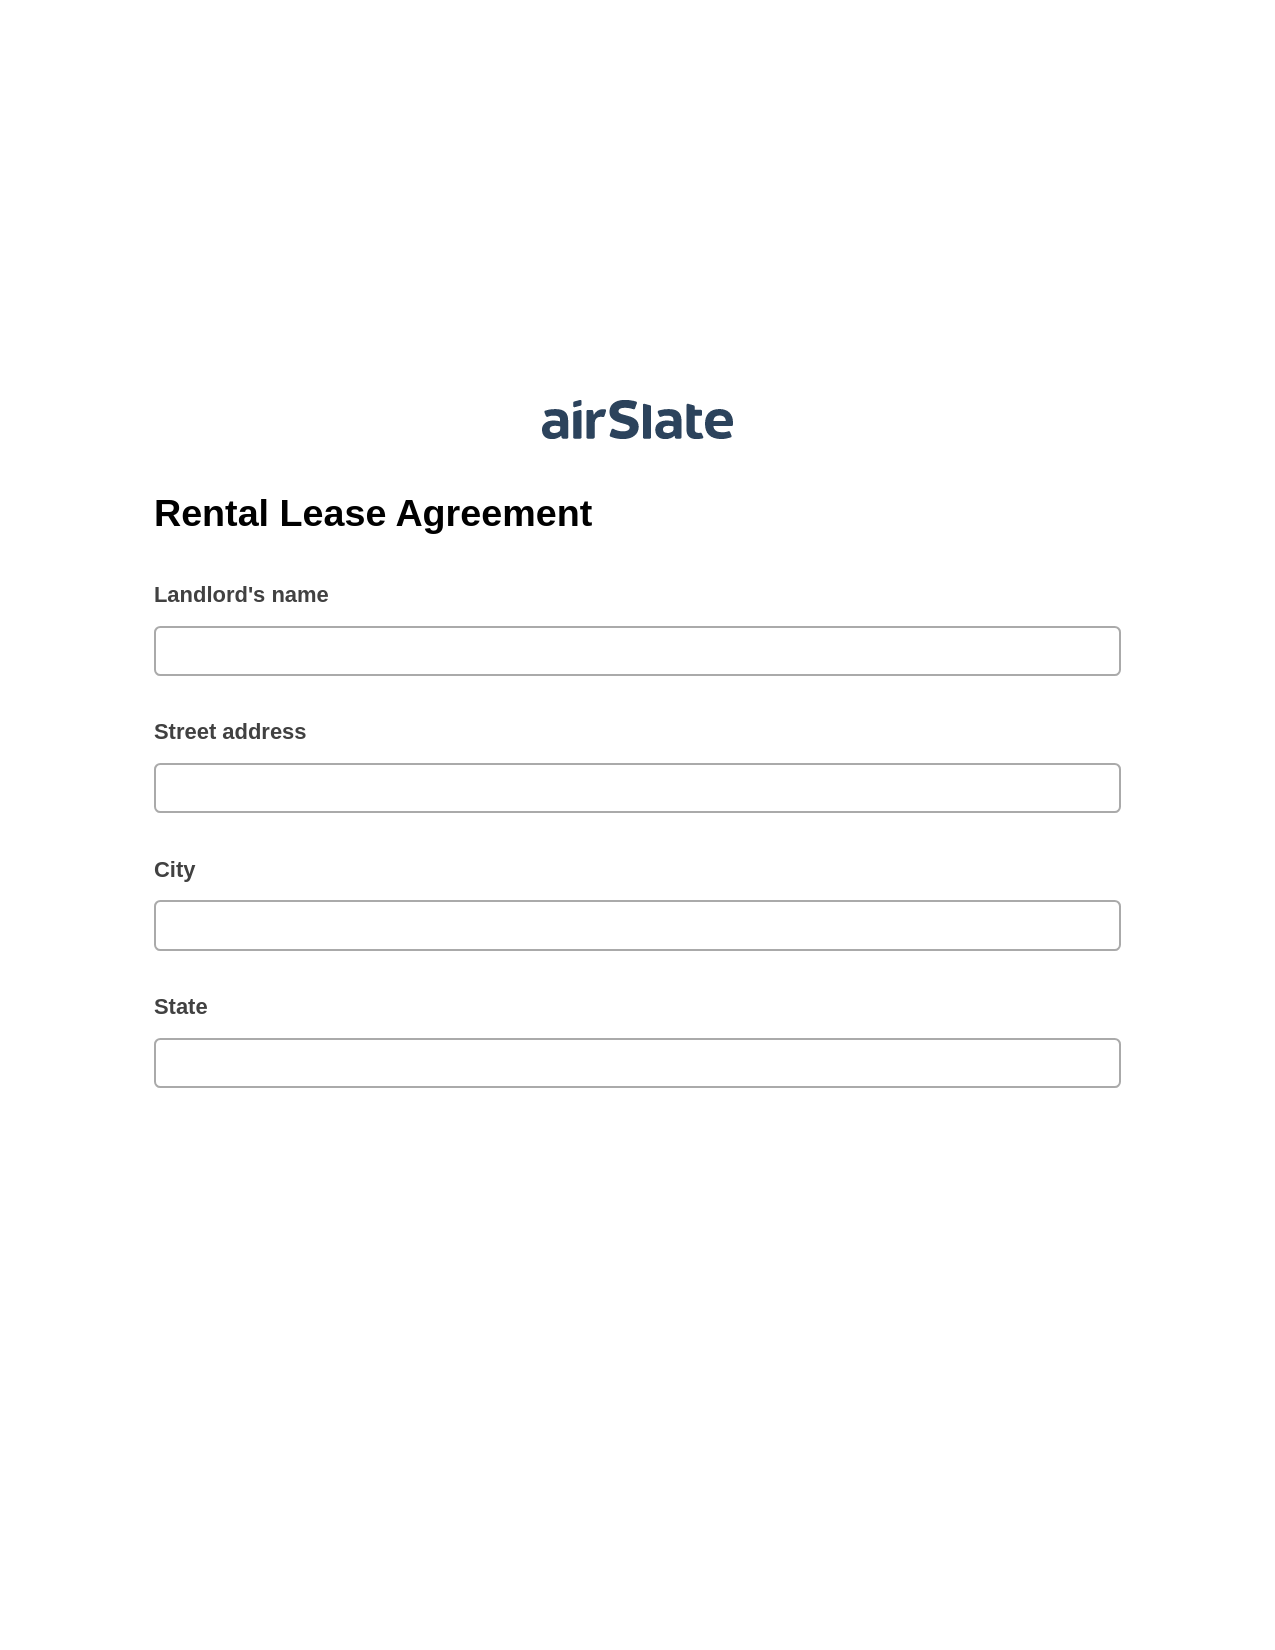 Rental Lease Agreement Pre-fill from CSV File Dropdown Options Bot, Jira Bot, Slack Notification Postfinish Bot